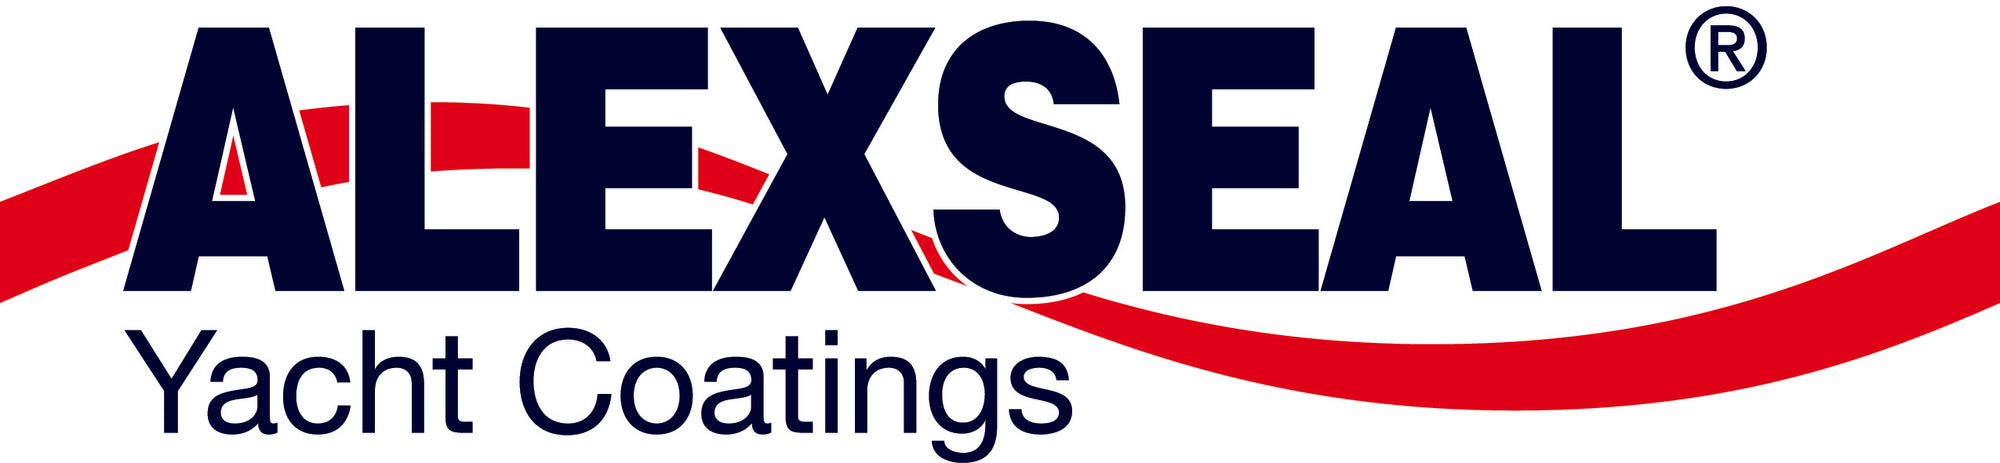 Alexseal yacht coatings logo